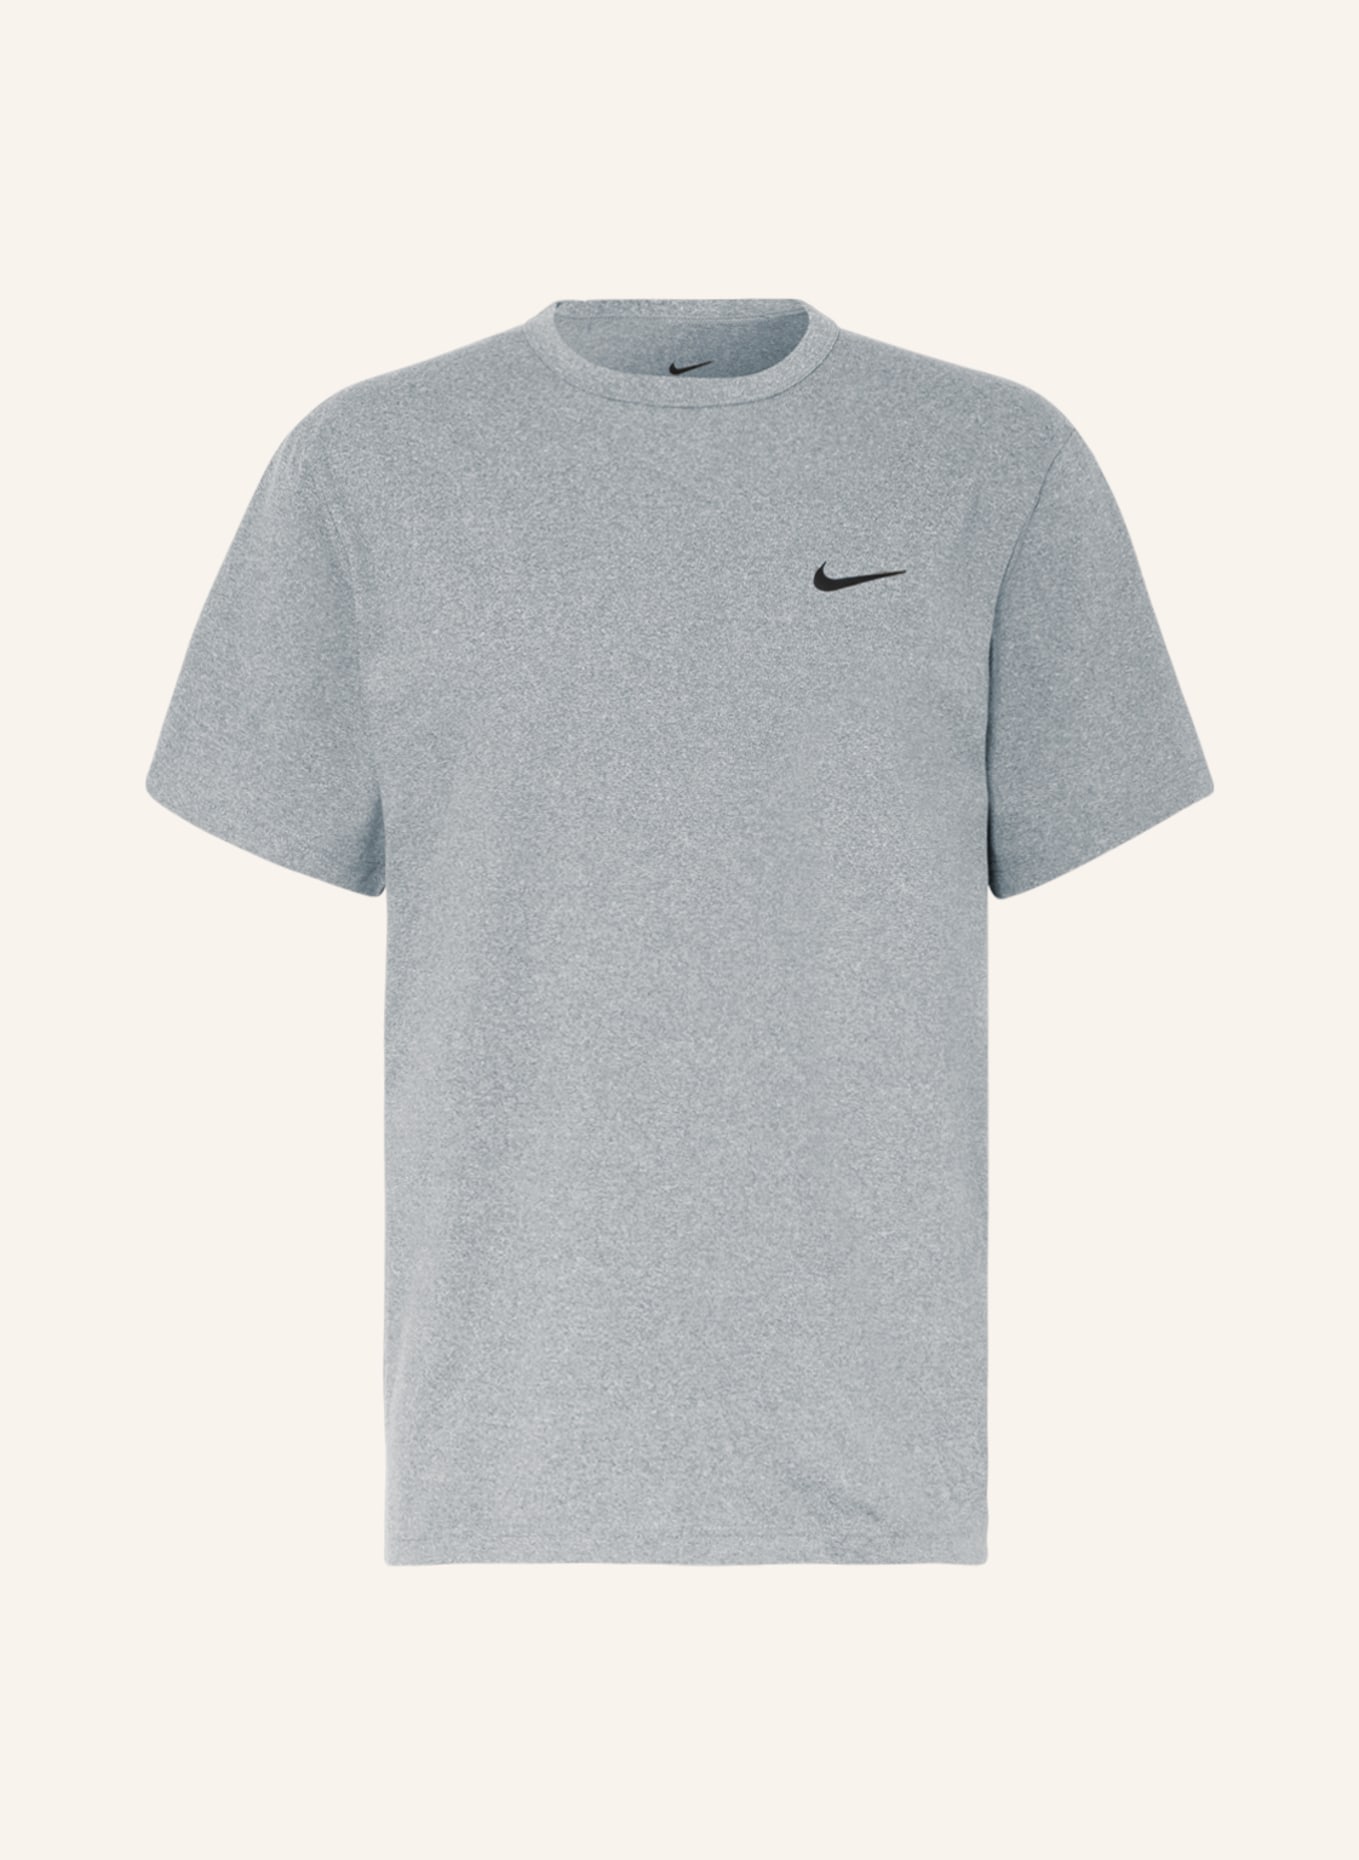 Nike T-Shirt HYVERSE, Farbe: GRAU (Bild 1)